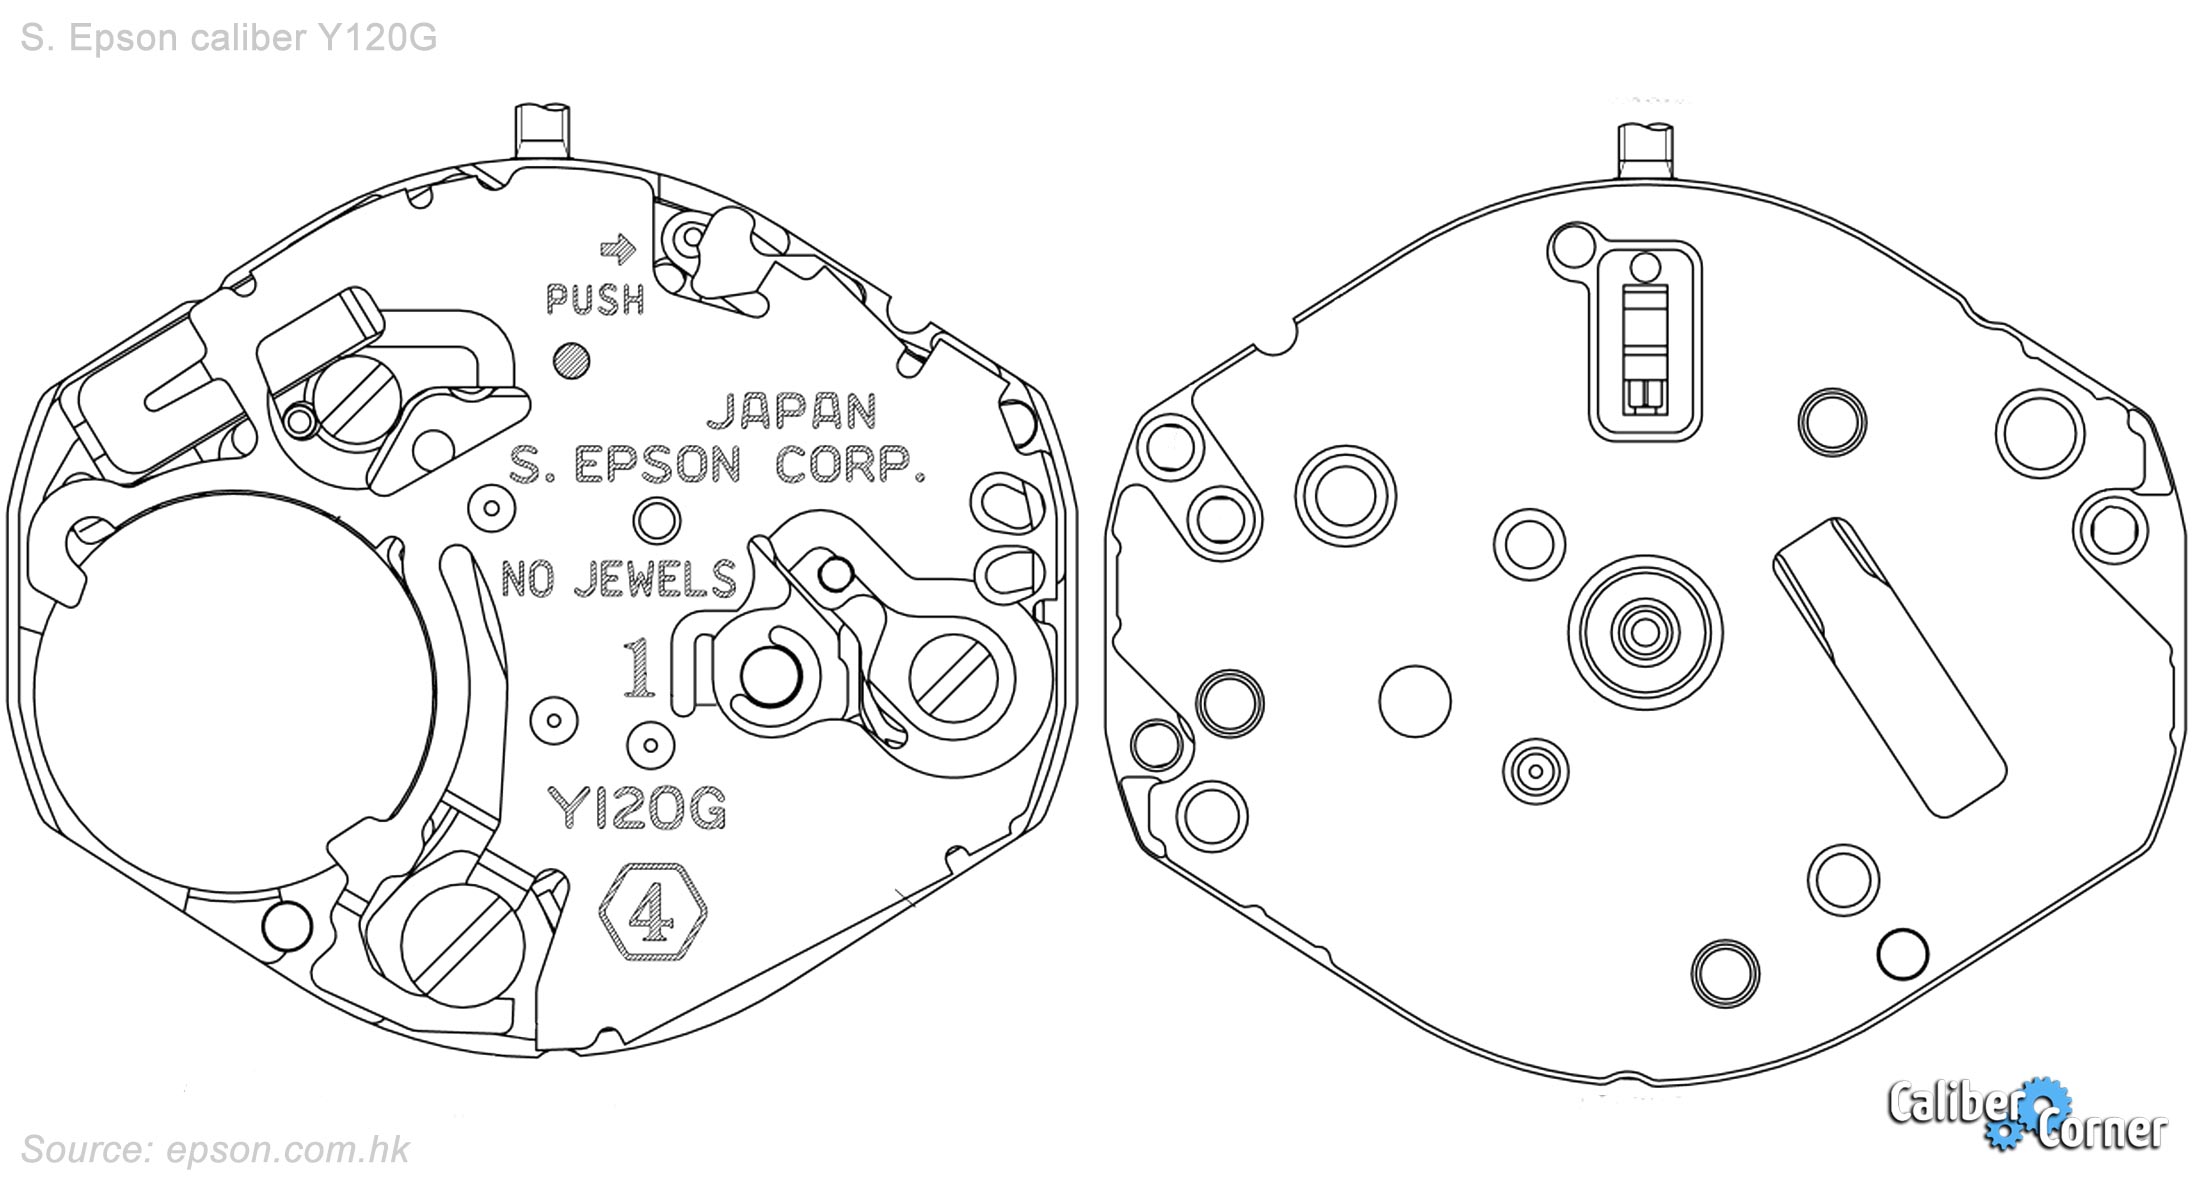 Seiko Epson Caliber Y120g Drawings